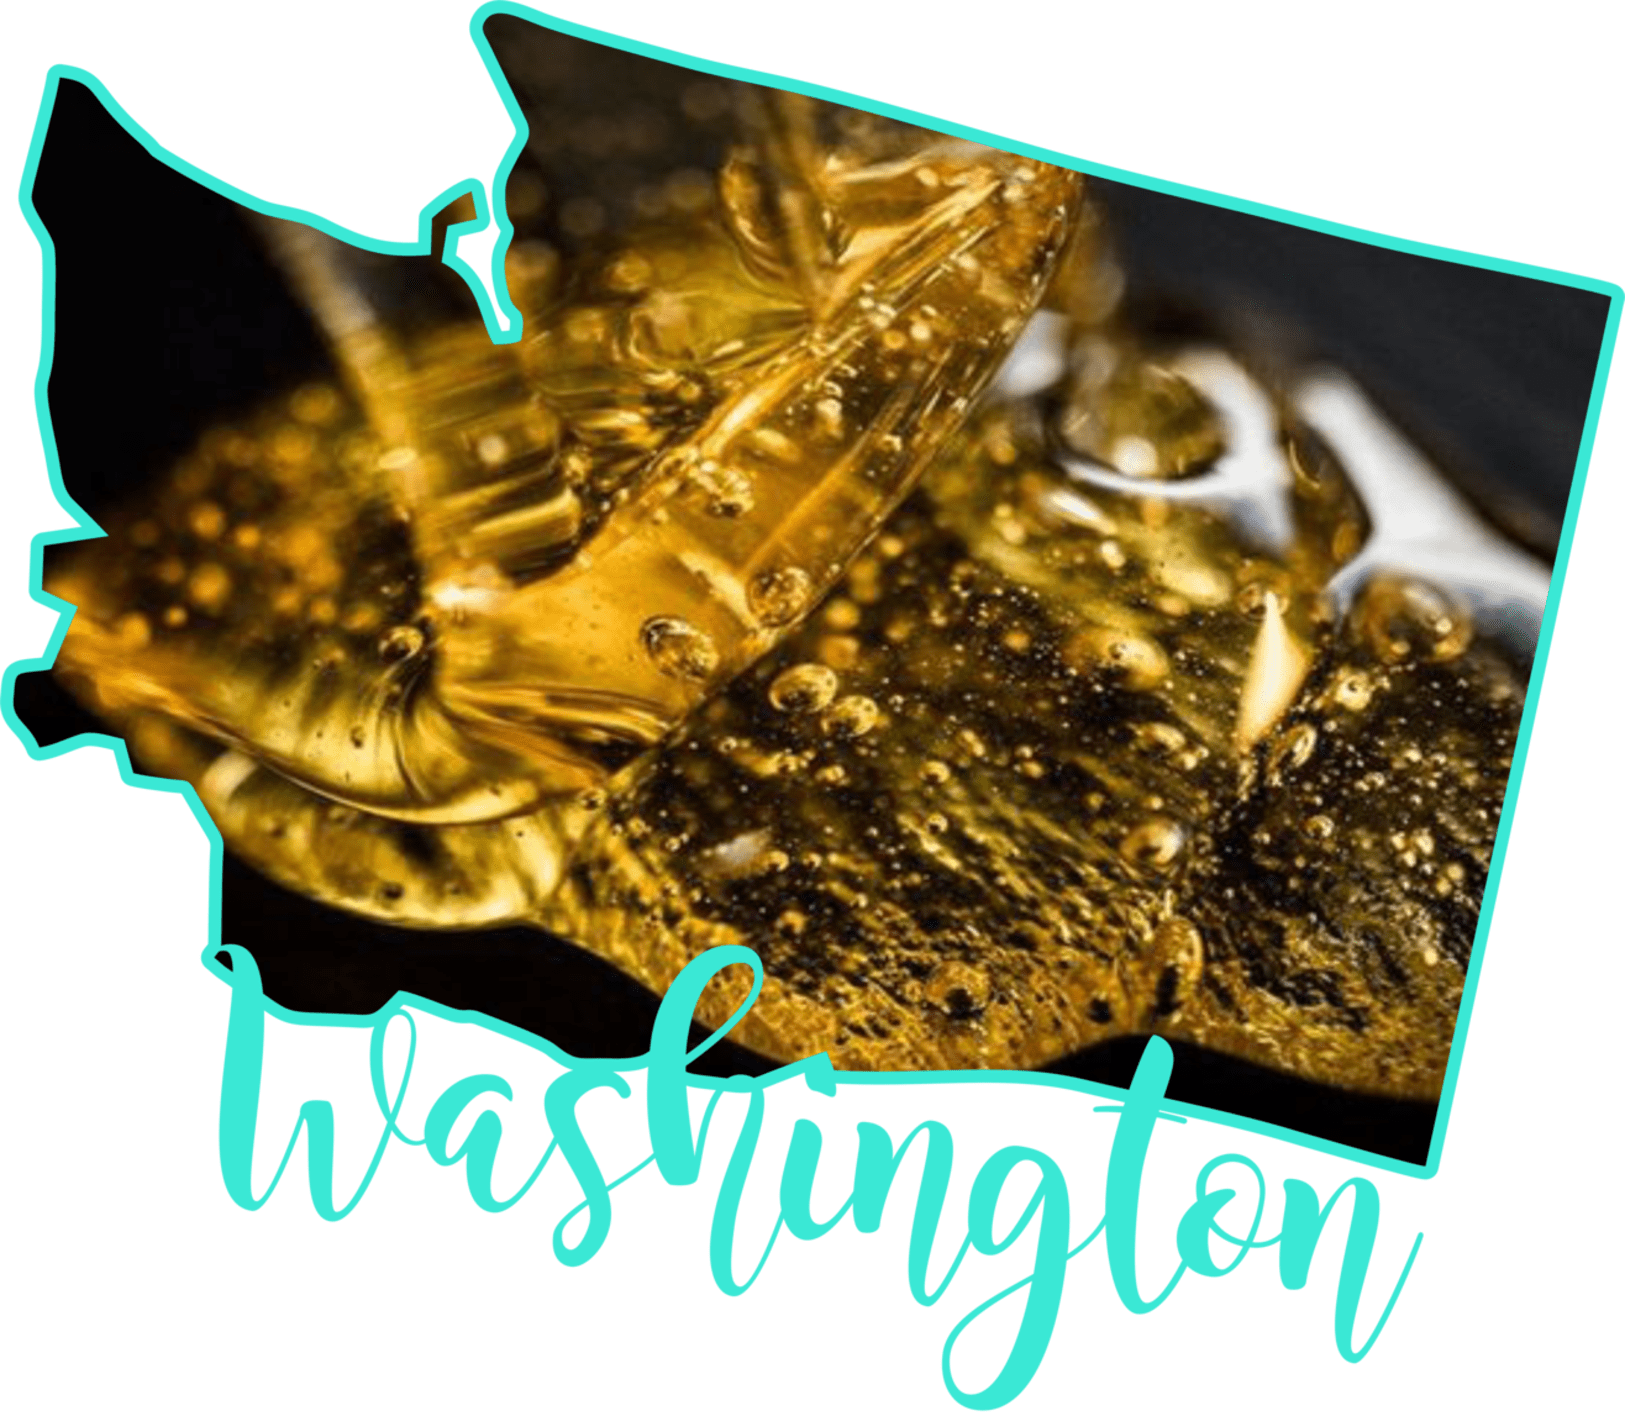 Washington Sugaring near me